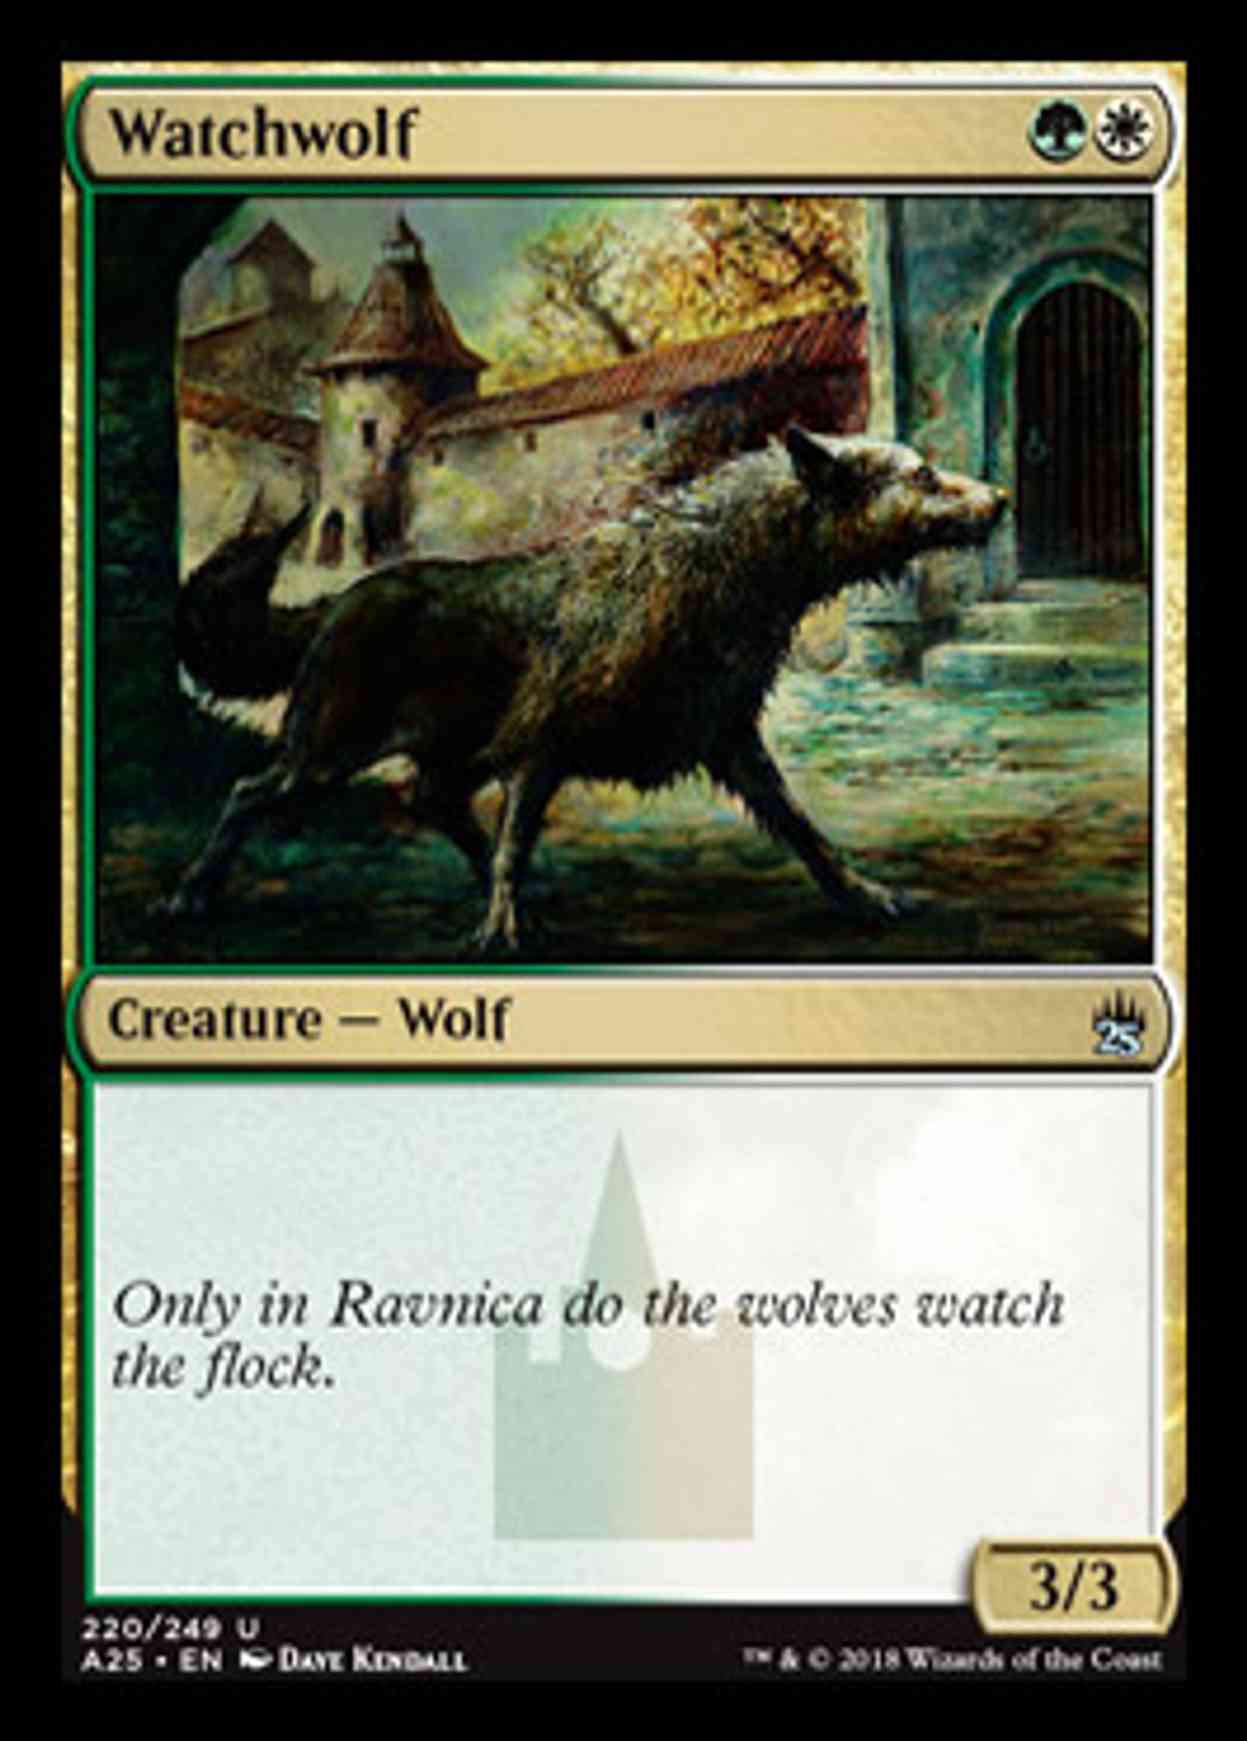 Watchwolf magic card front